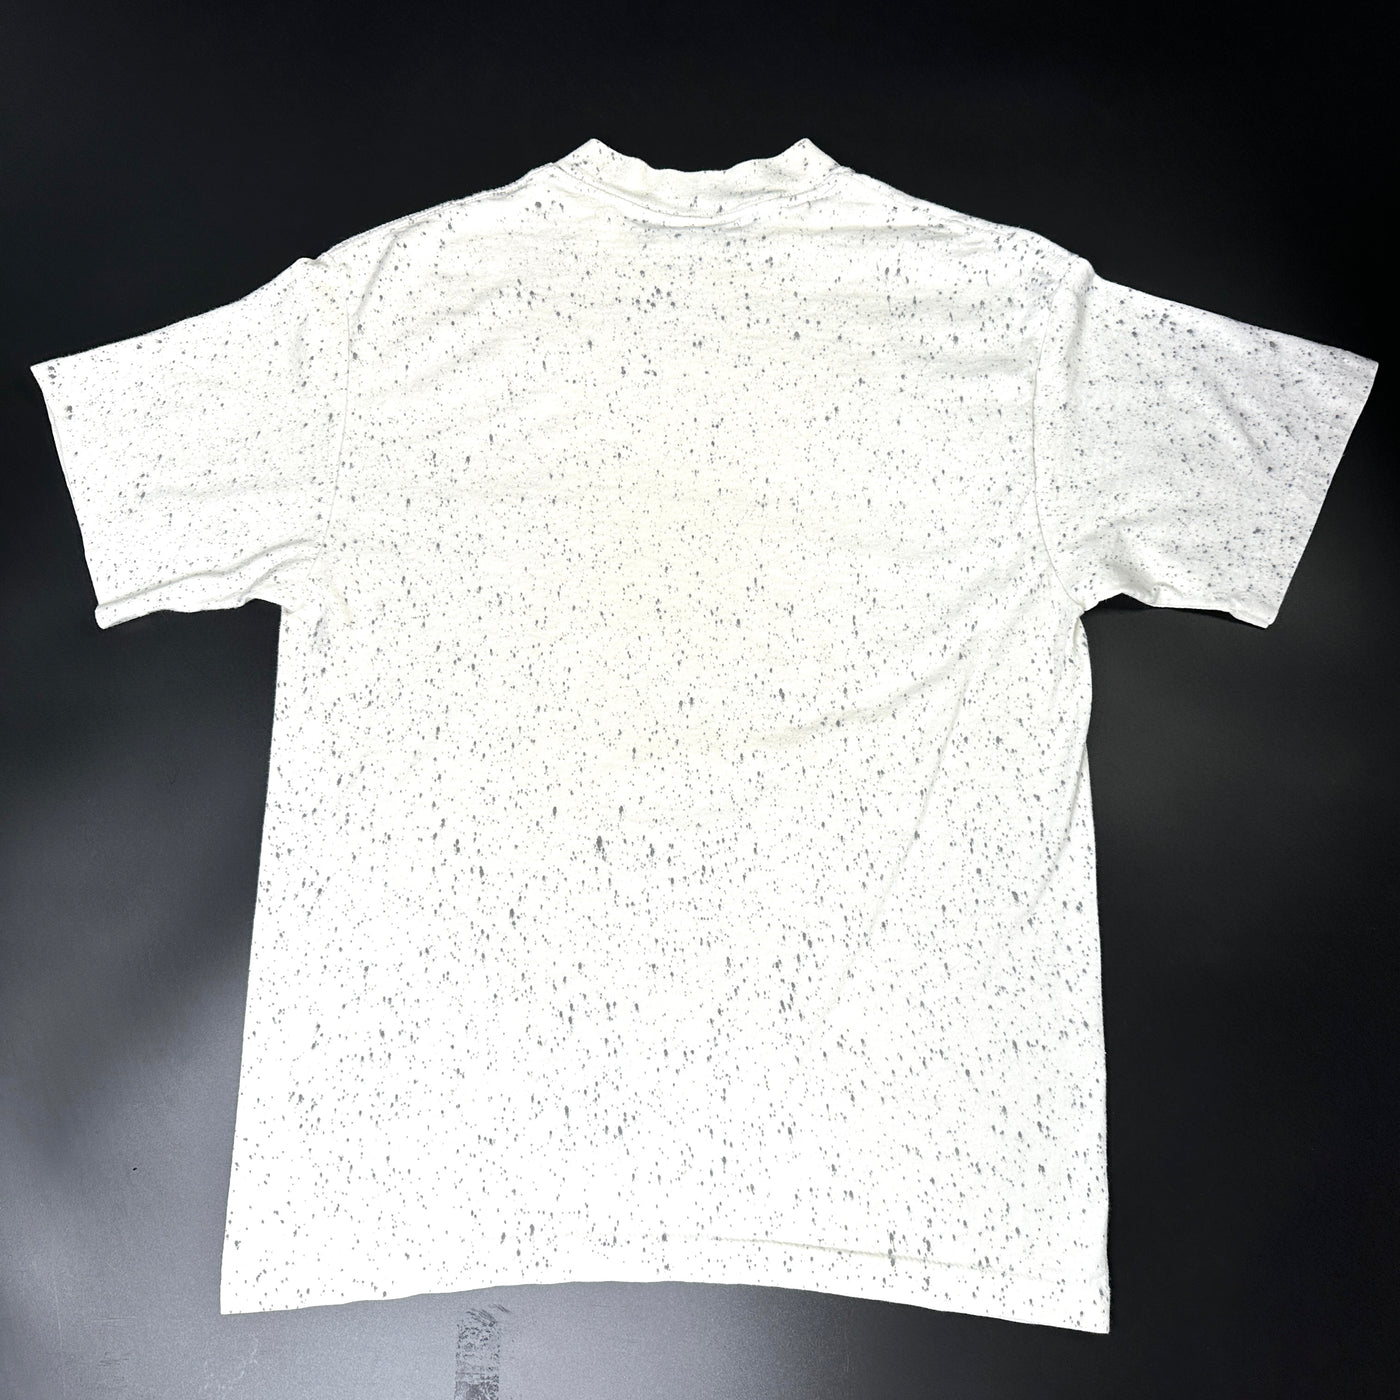 '91 NBA Finals White Sports T-Shirt sz M